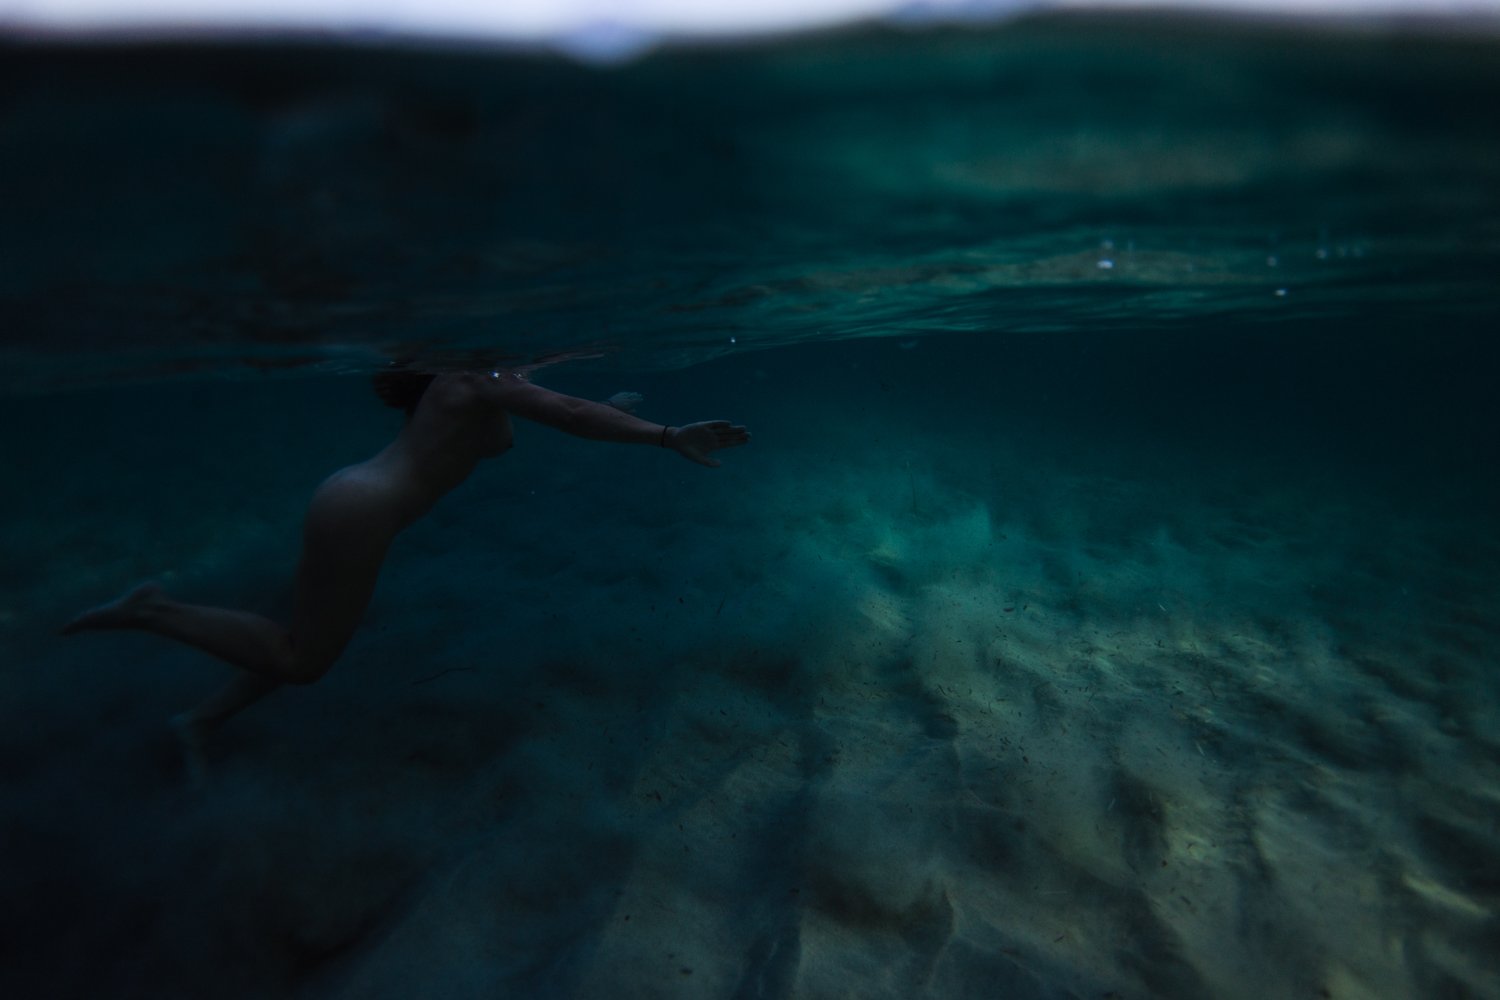 underwater corse corsica sea mediterranean island france french photographer photographe ajaccio Krista Espino Capo di feno wave nude nue femme woman fine art photography-15.jpg